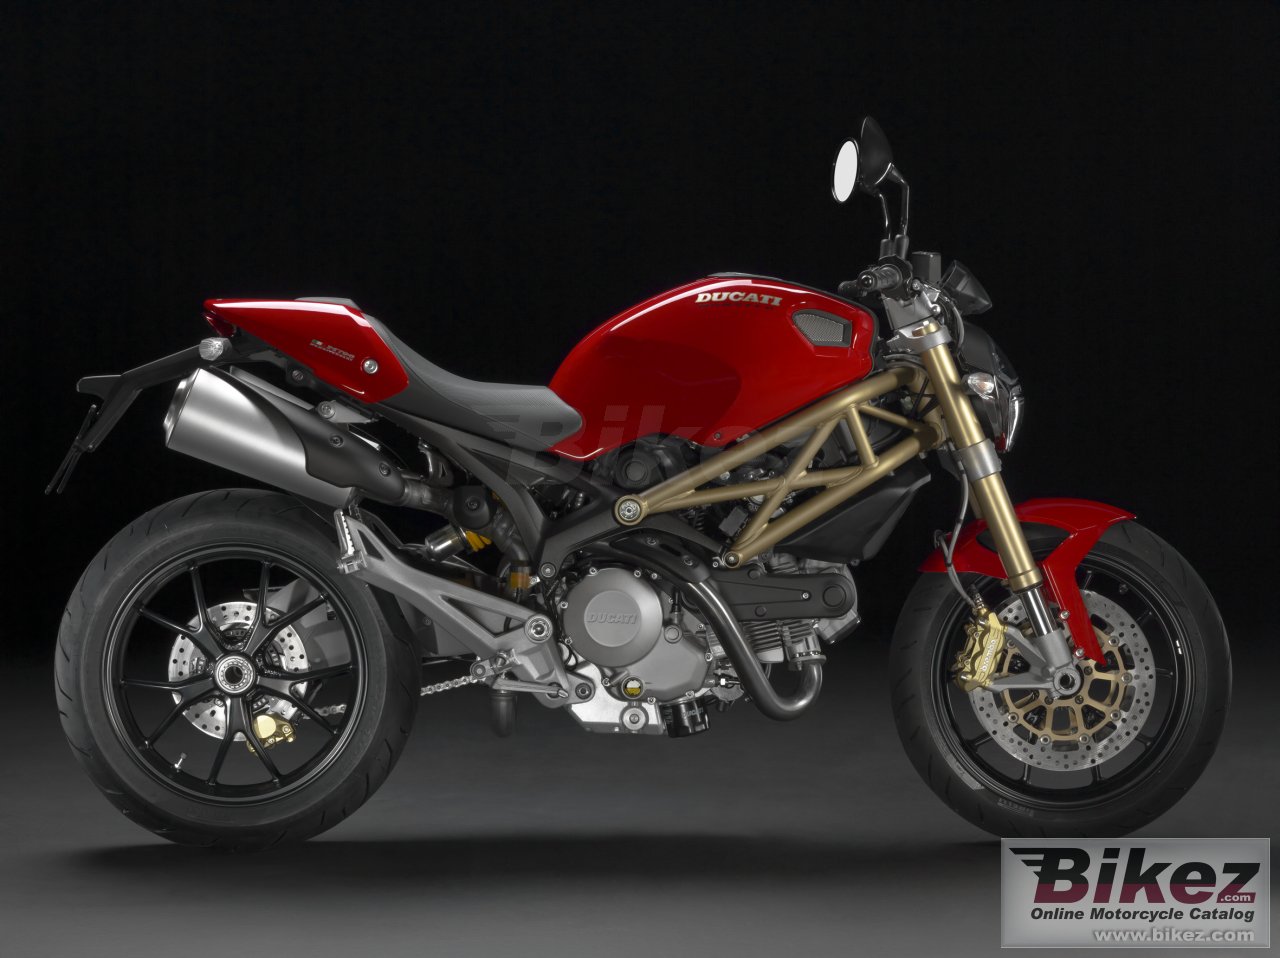 Ducati Monster 796 20th Anniversary